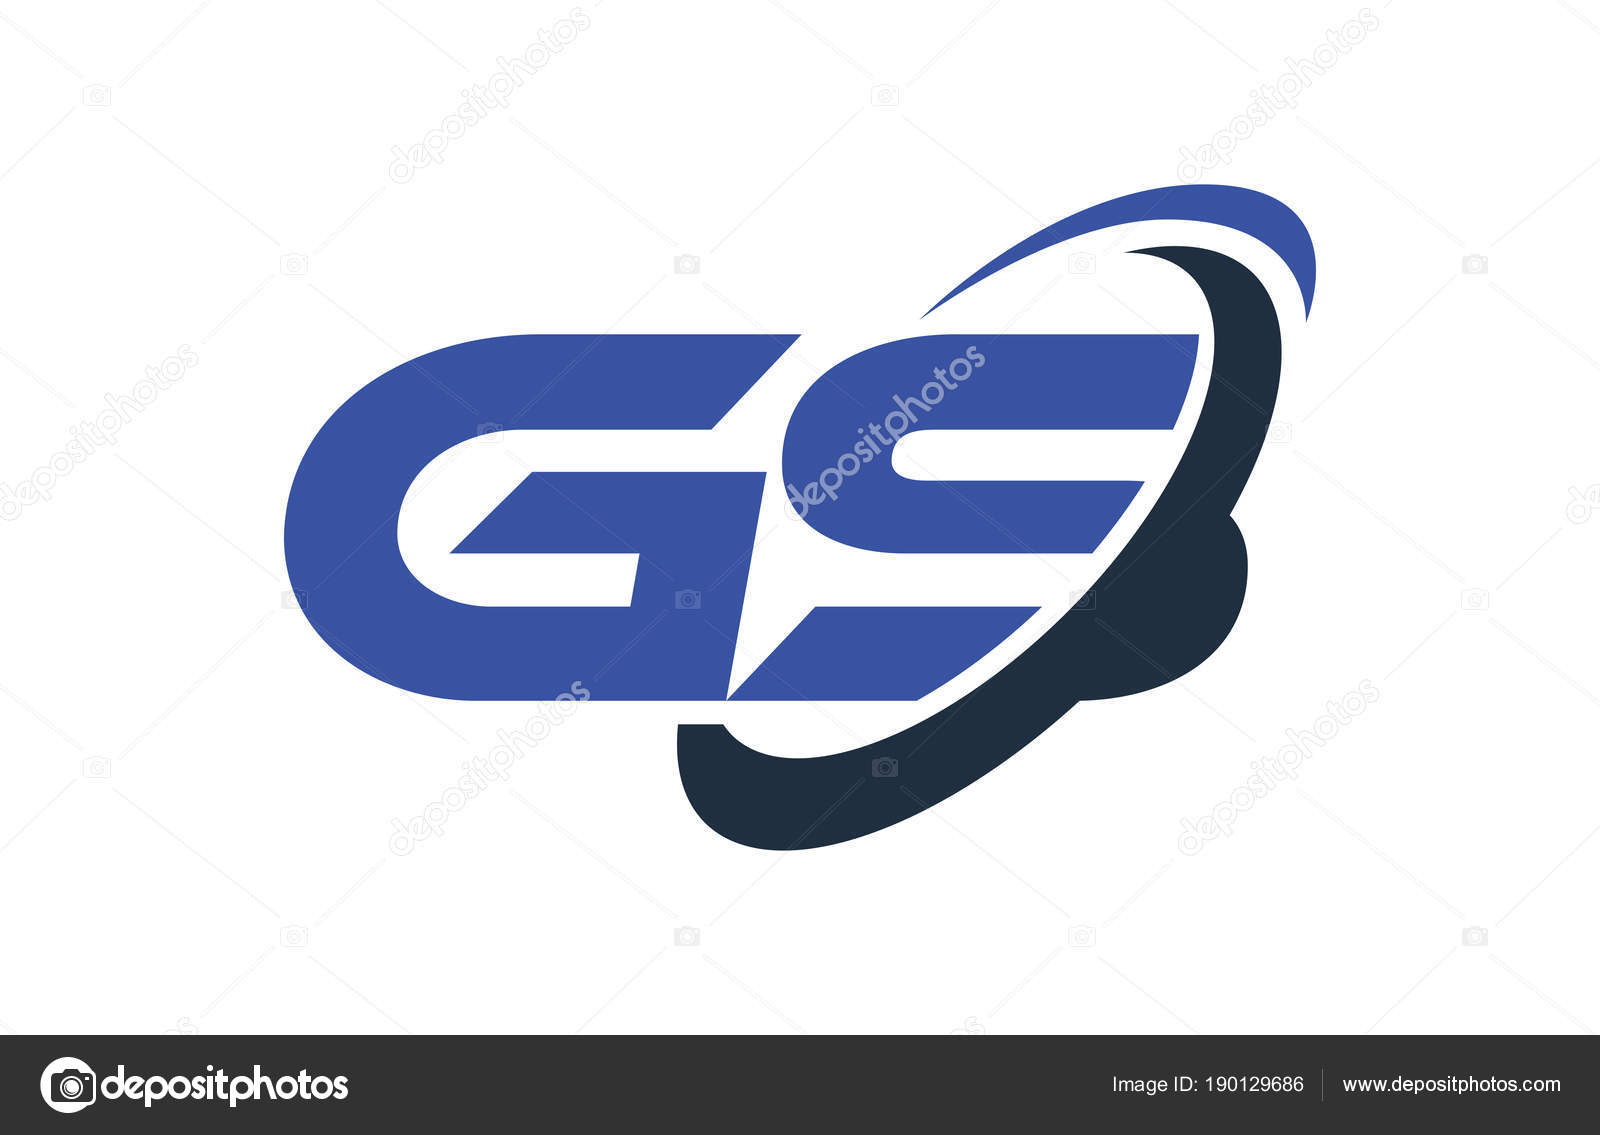 ᐈ Gs Logosu Royalty Free Gs Logo Images Download On Depositphotos